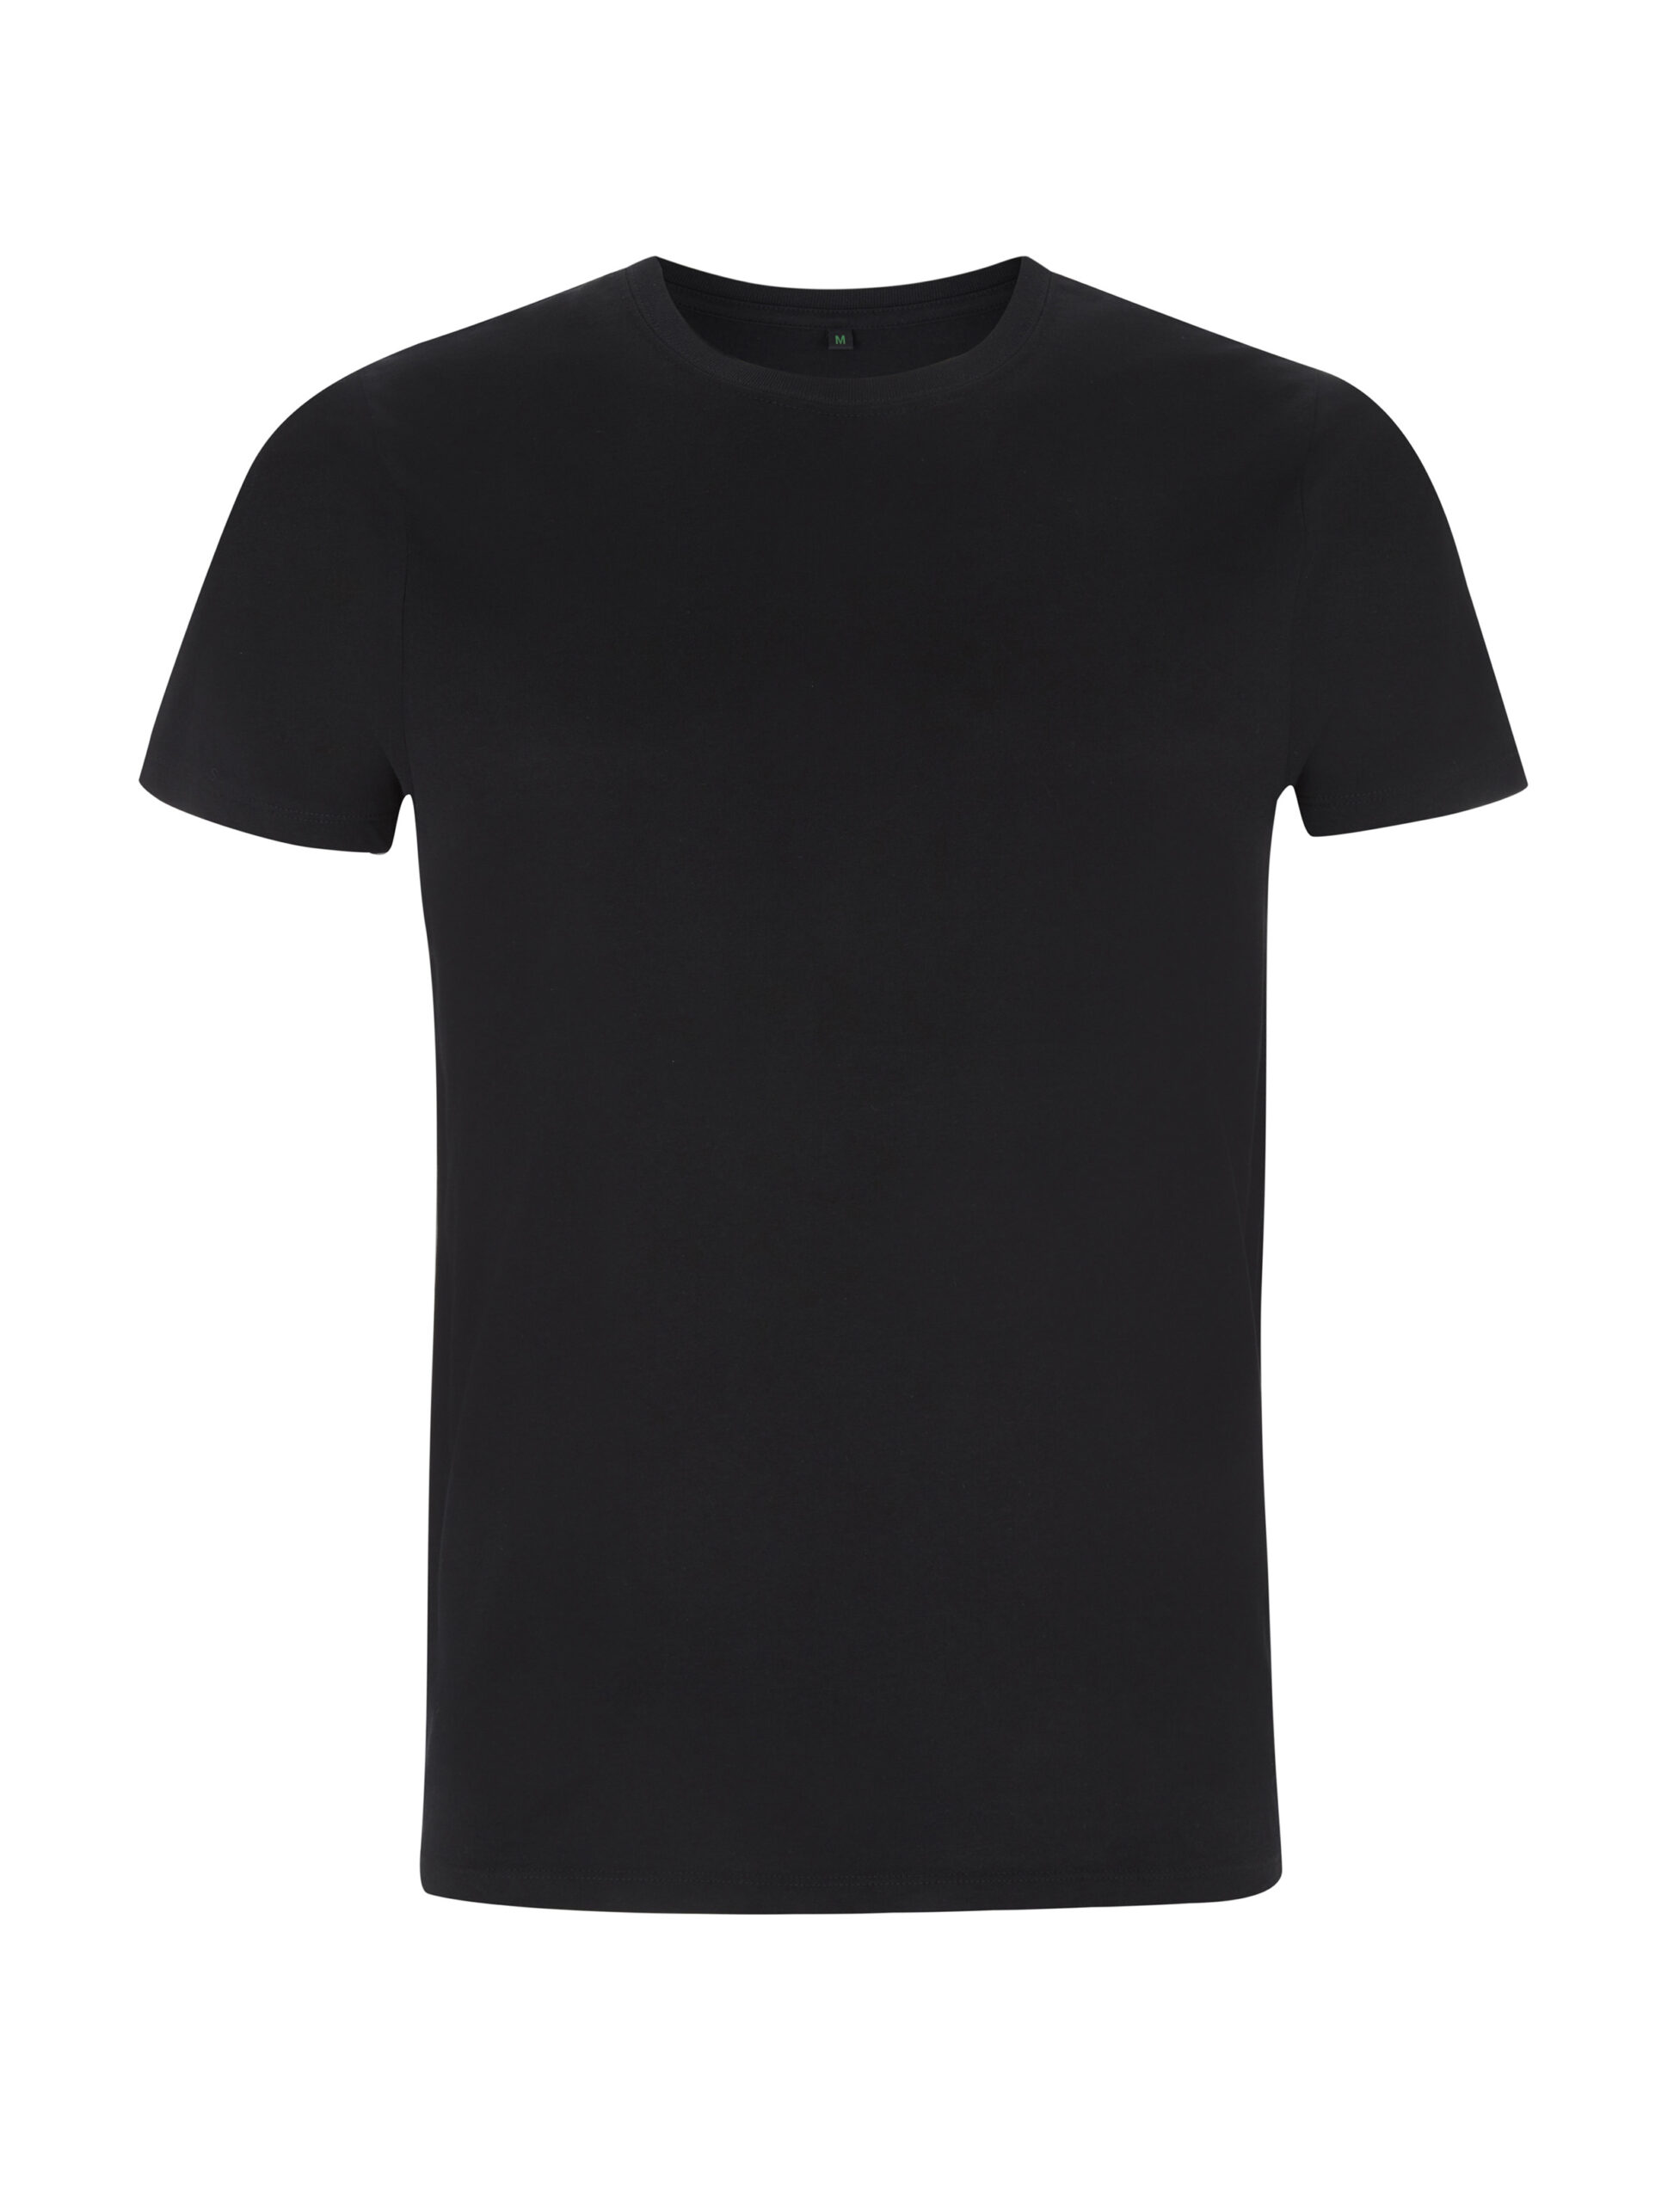 Luxe t-shirt voor heren Zwart t-shirt Kleding Herenkleding Overhemden & T-shirts T-shirts 